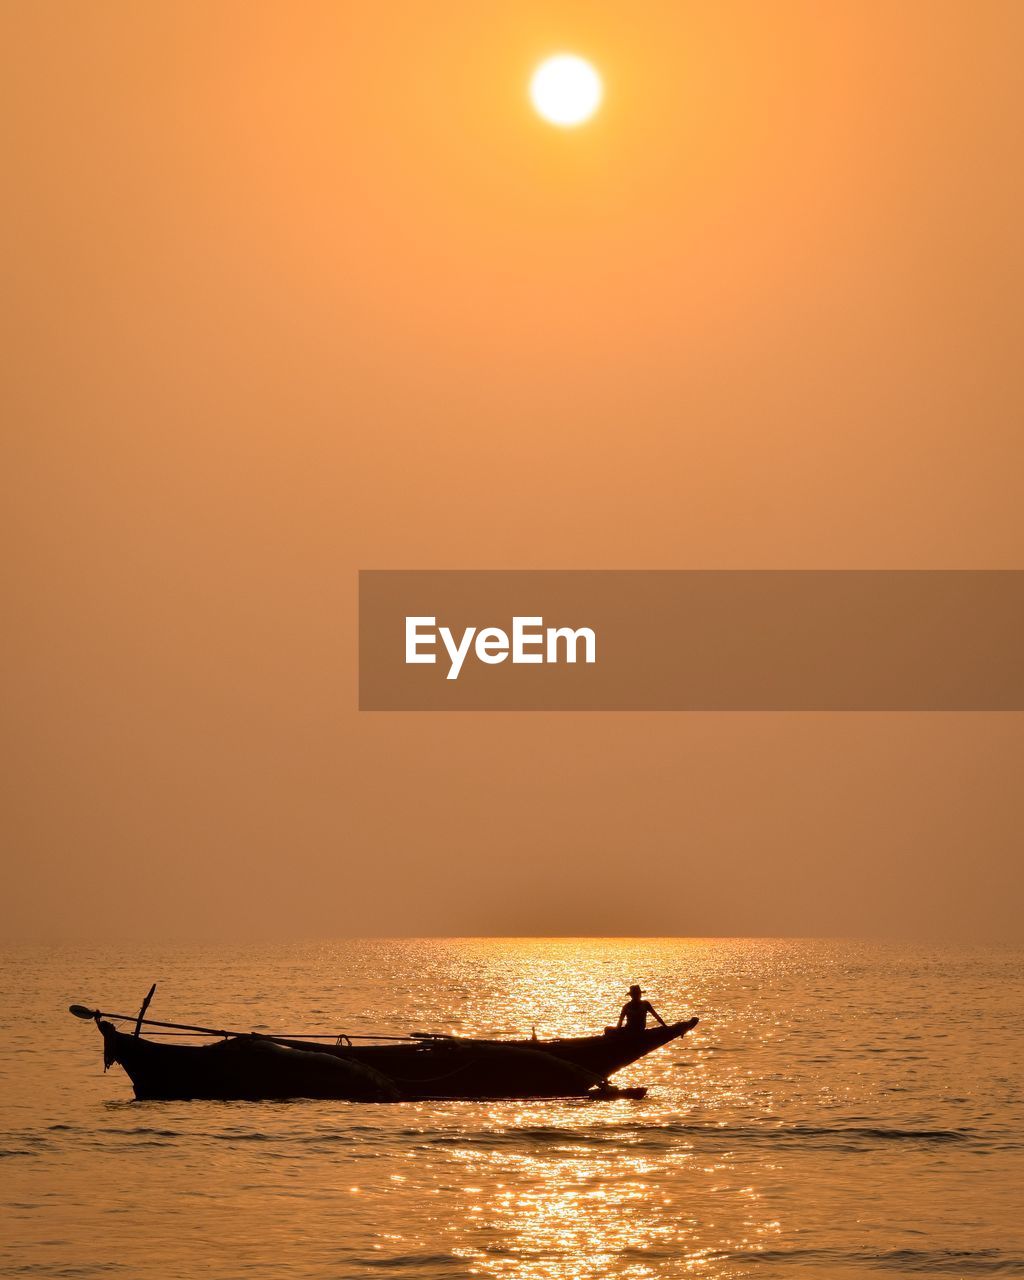 Silhouette man in boat on sea against orange sky